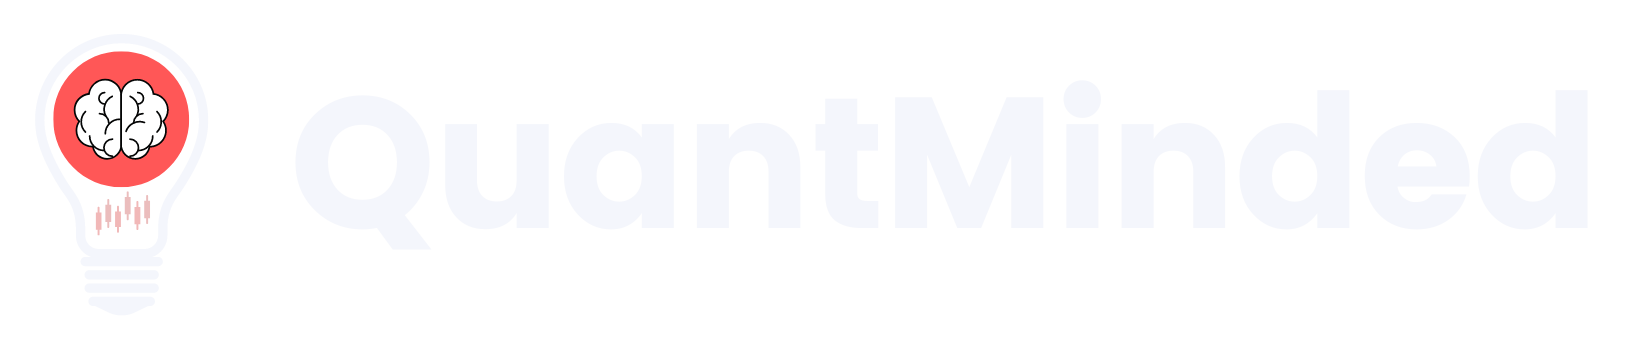 QuantMinded Logo